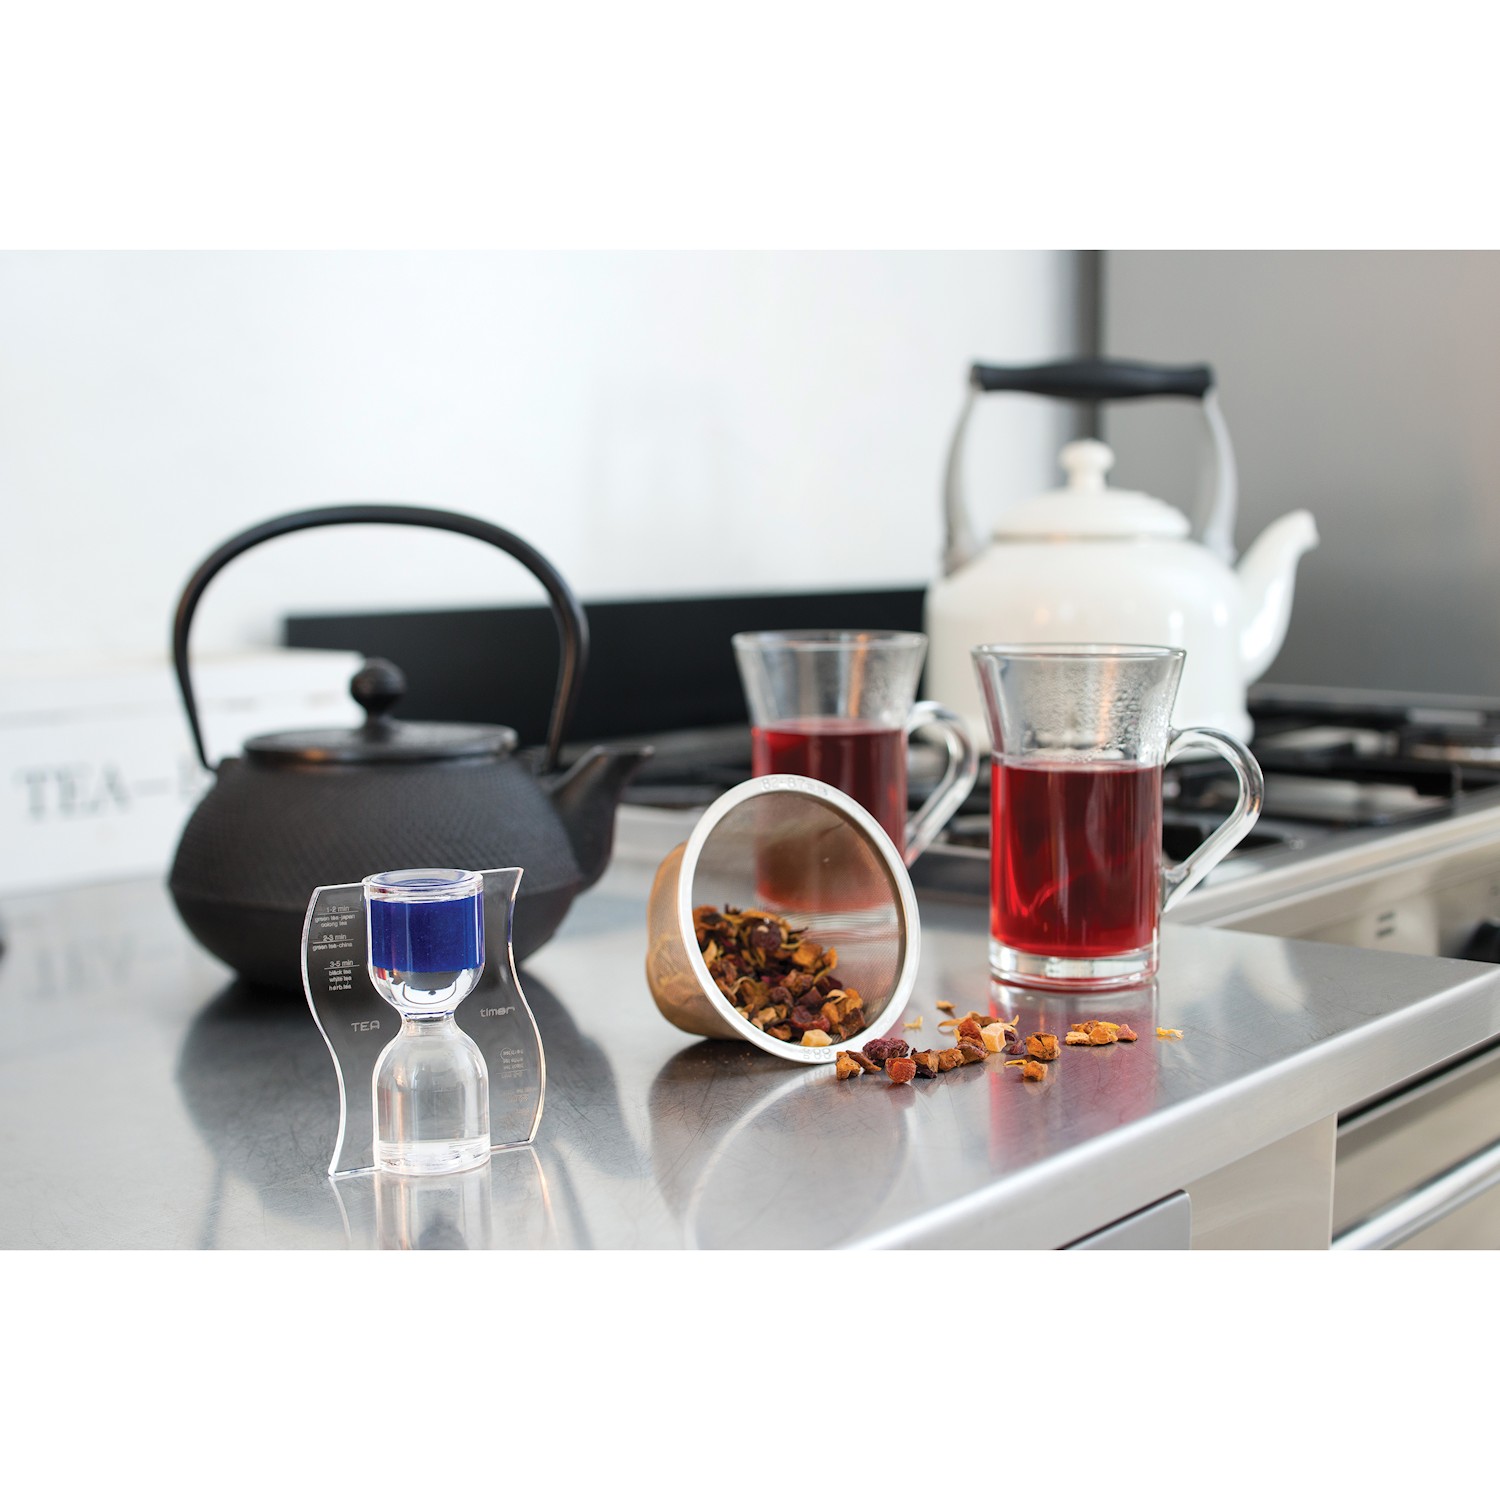 Paradox Anti-Gravity Hourglass Tea Timer - Sand Runs Upwards | eBay1500 x 1500